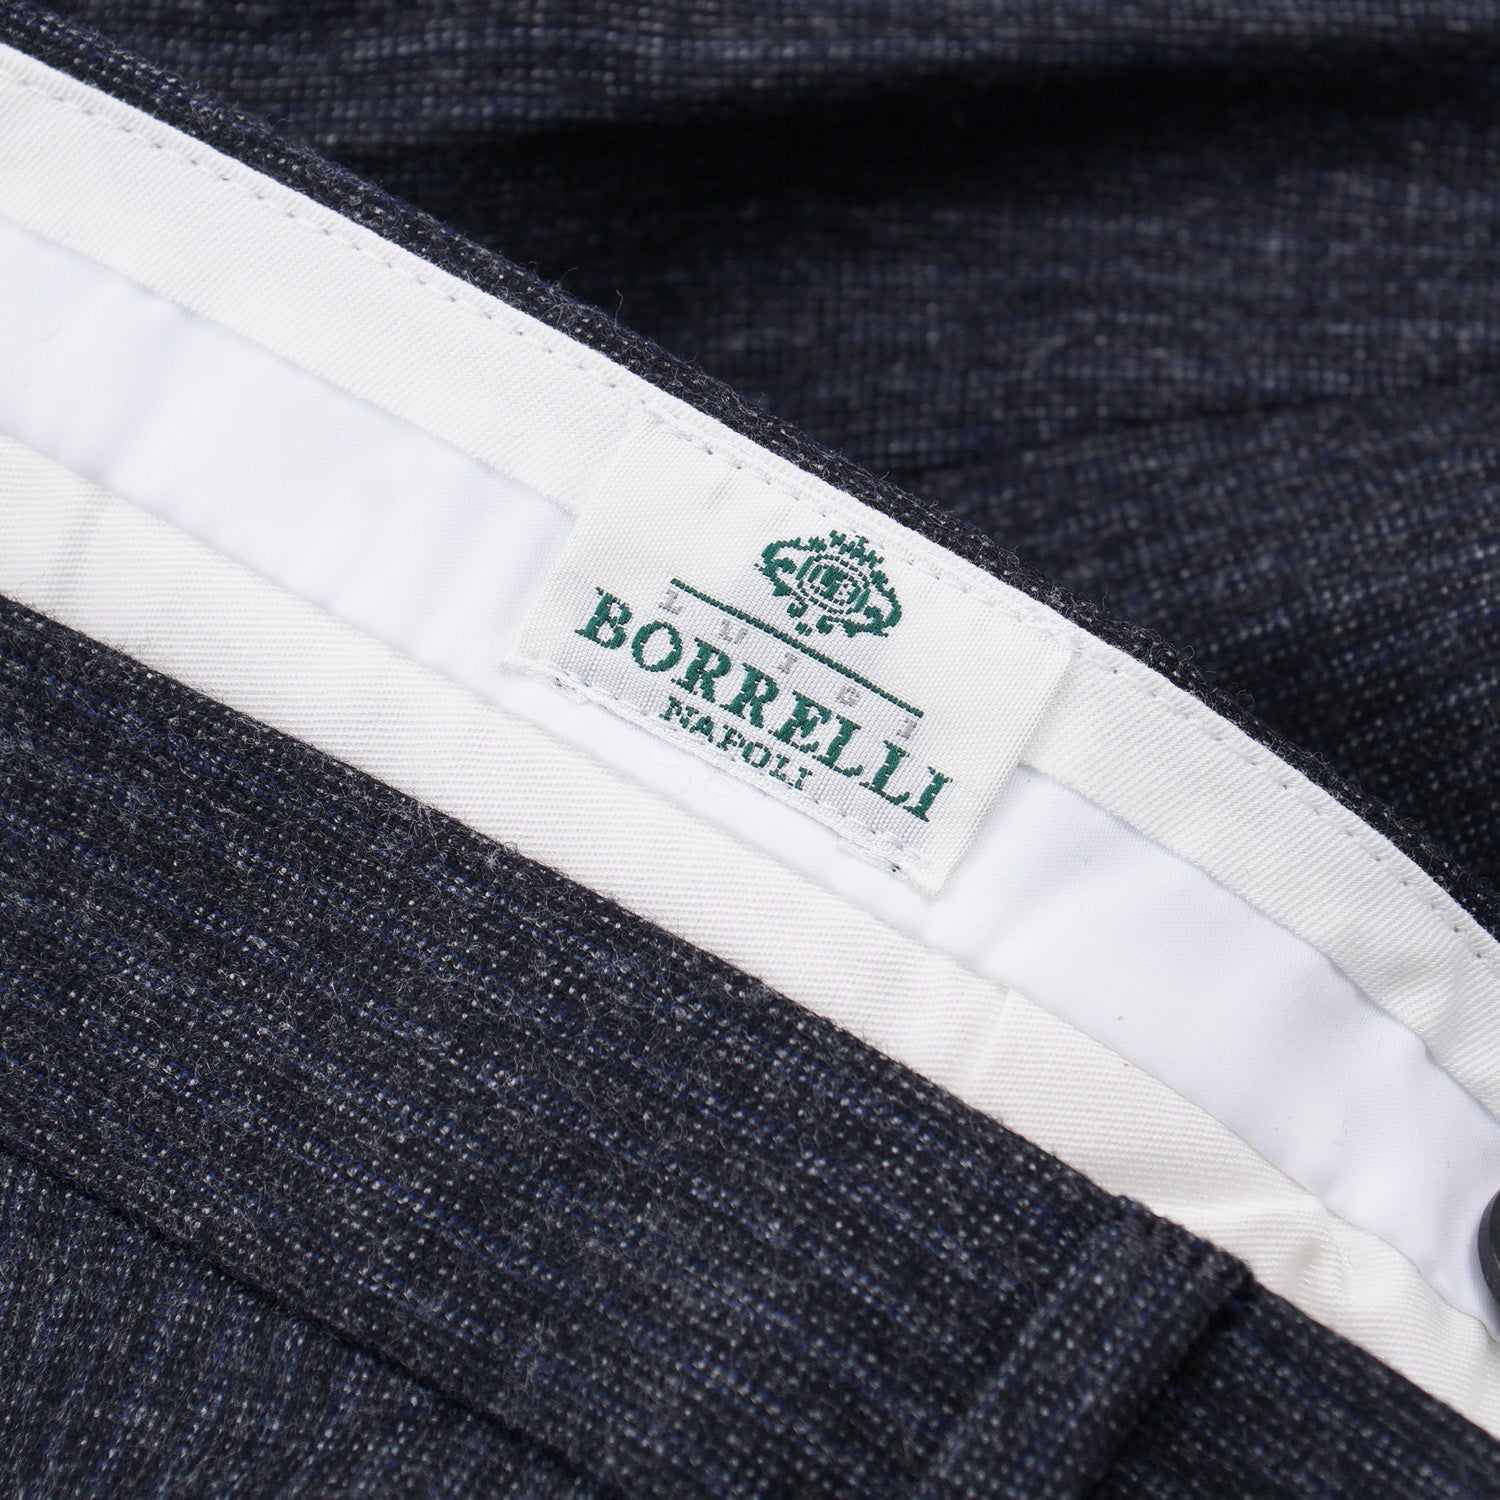 Luigi Borrelli Brushed Wool Dress Pants - Top Shelf Apparel